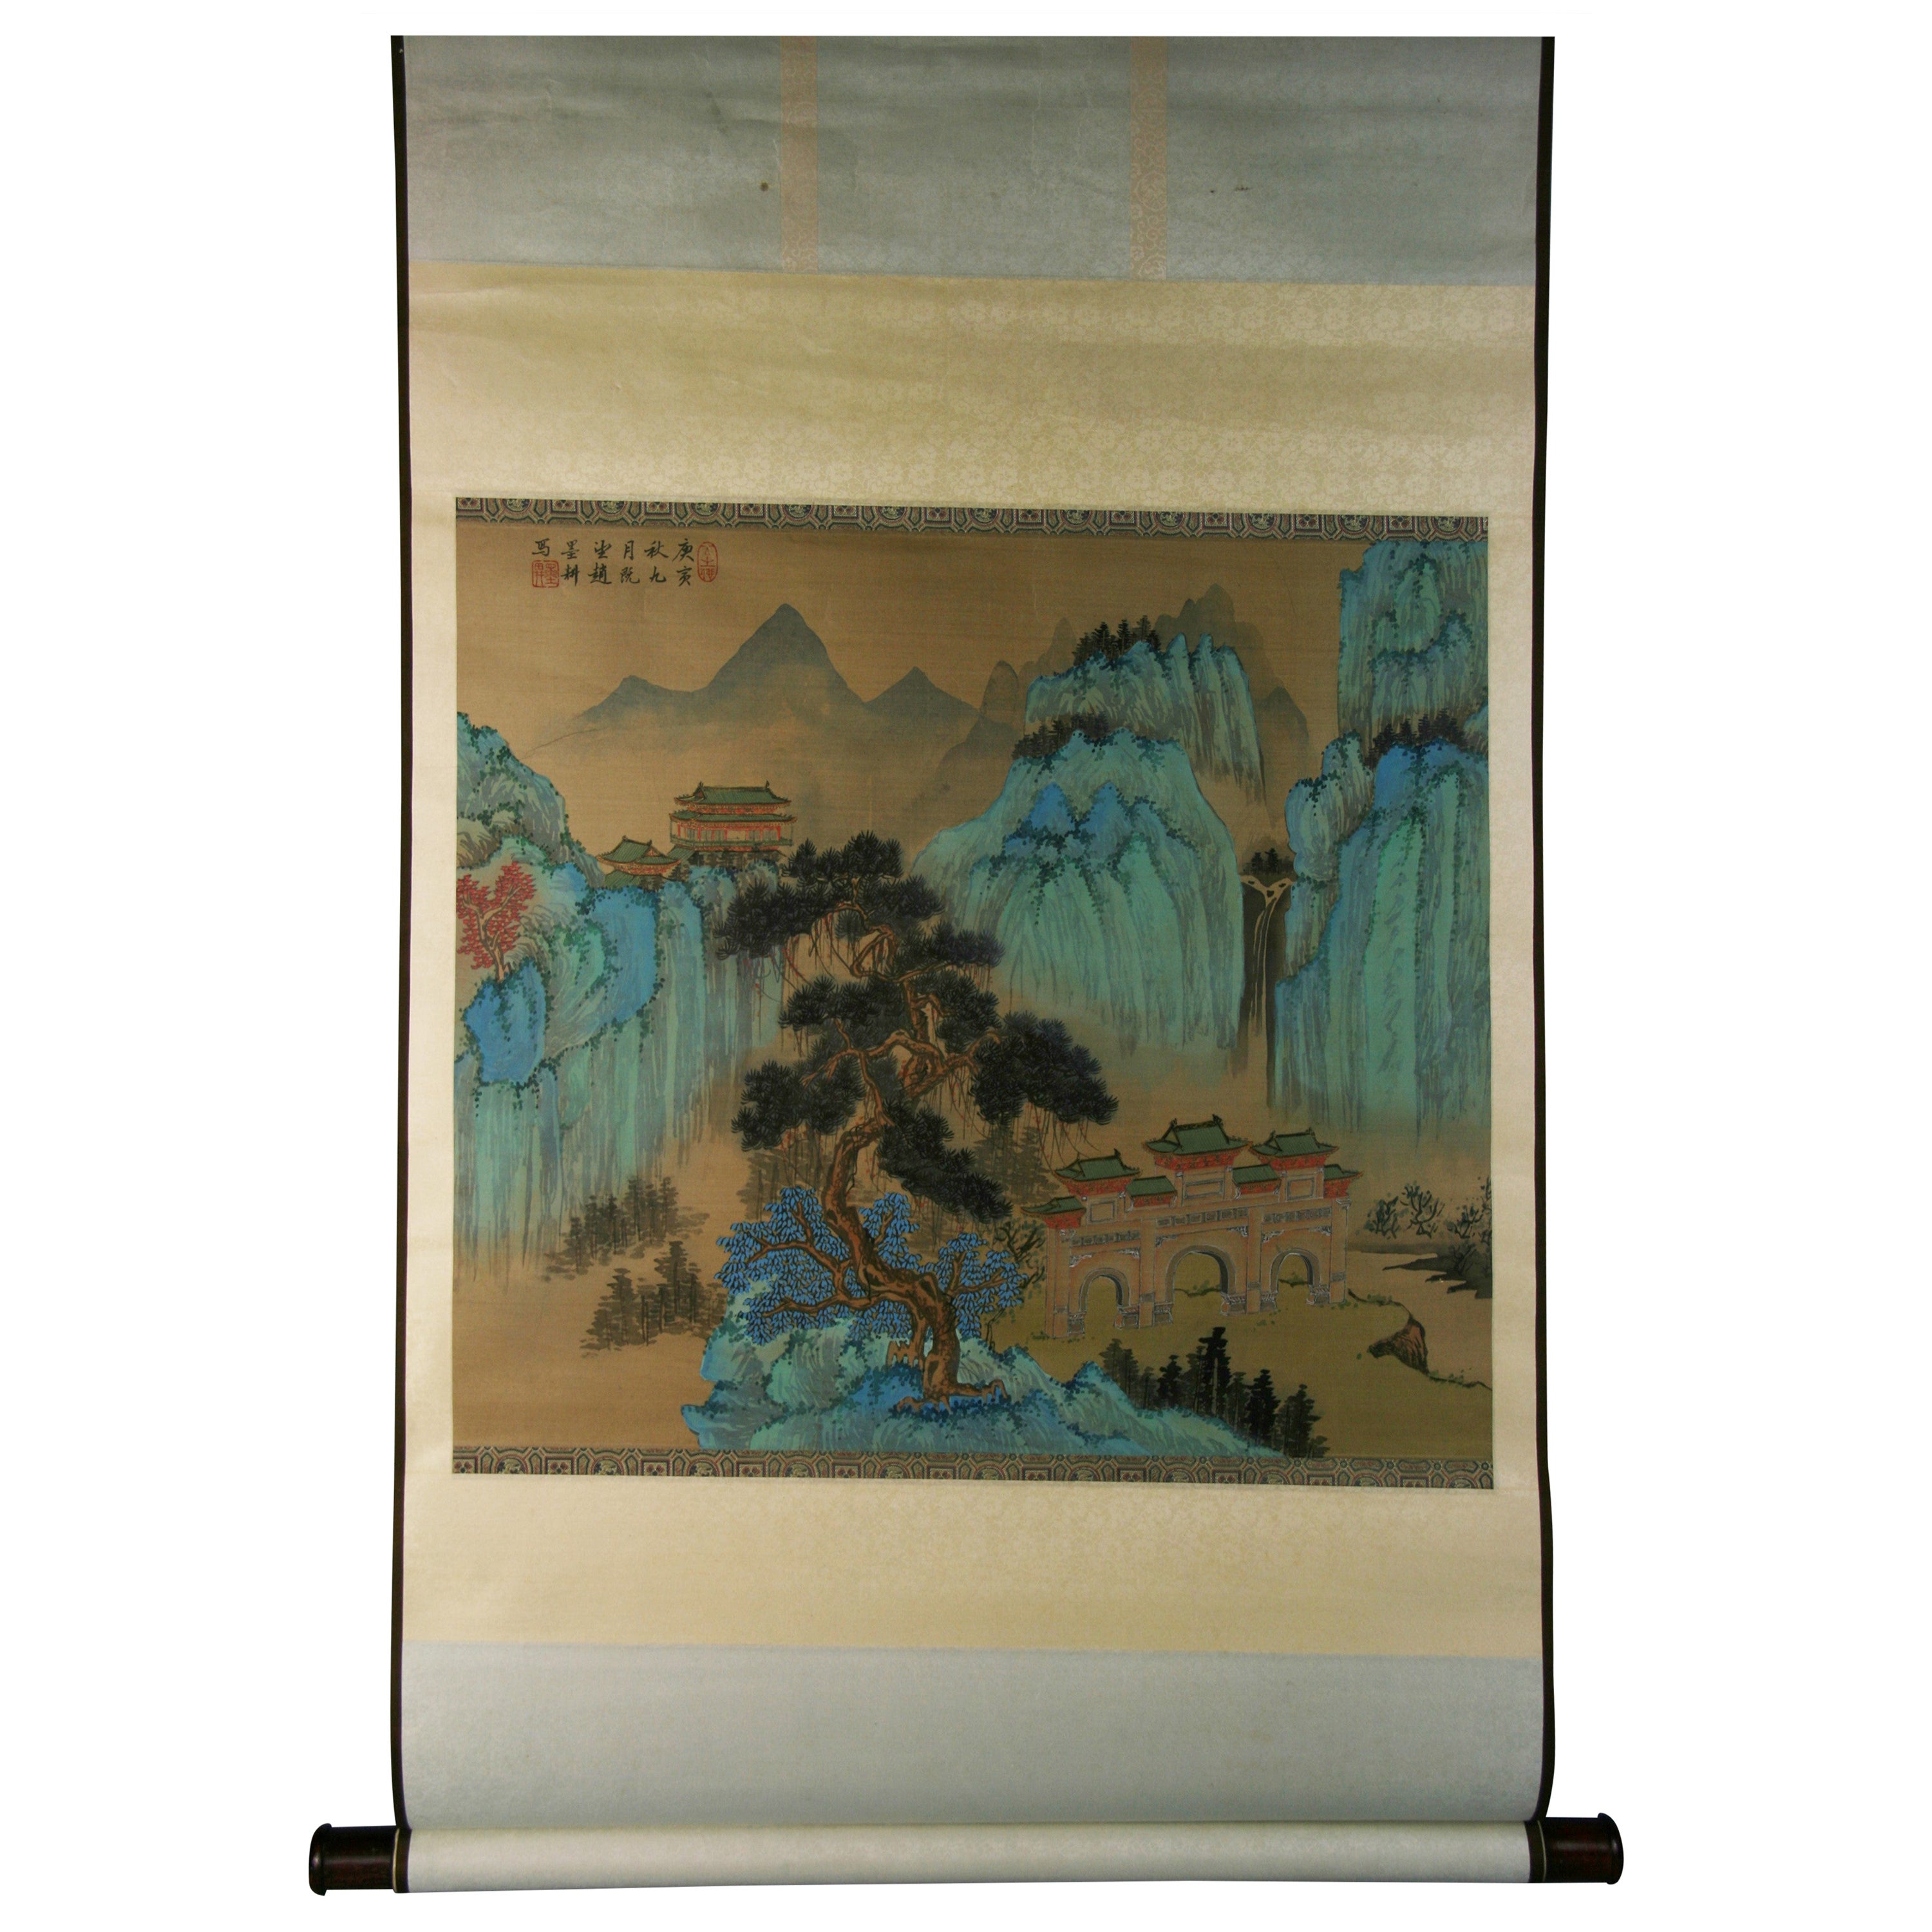 4014 Japanese blue waterfall scroll landscape
Image size 20.5